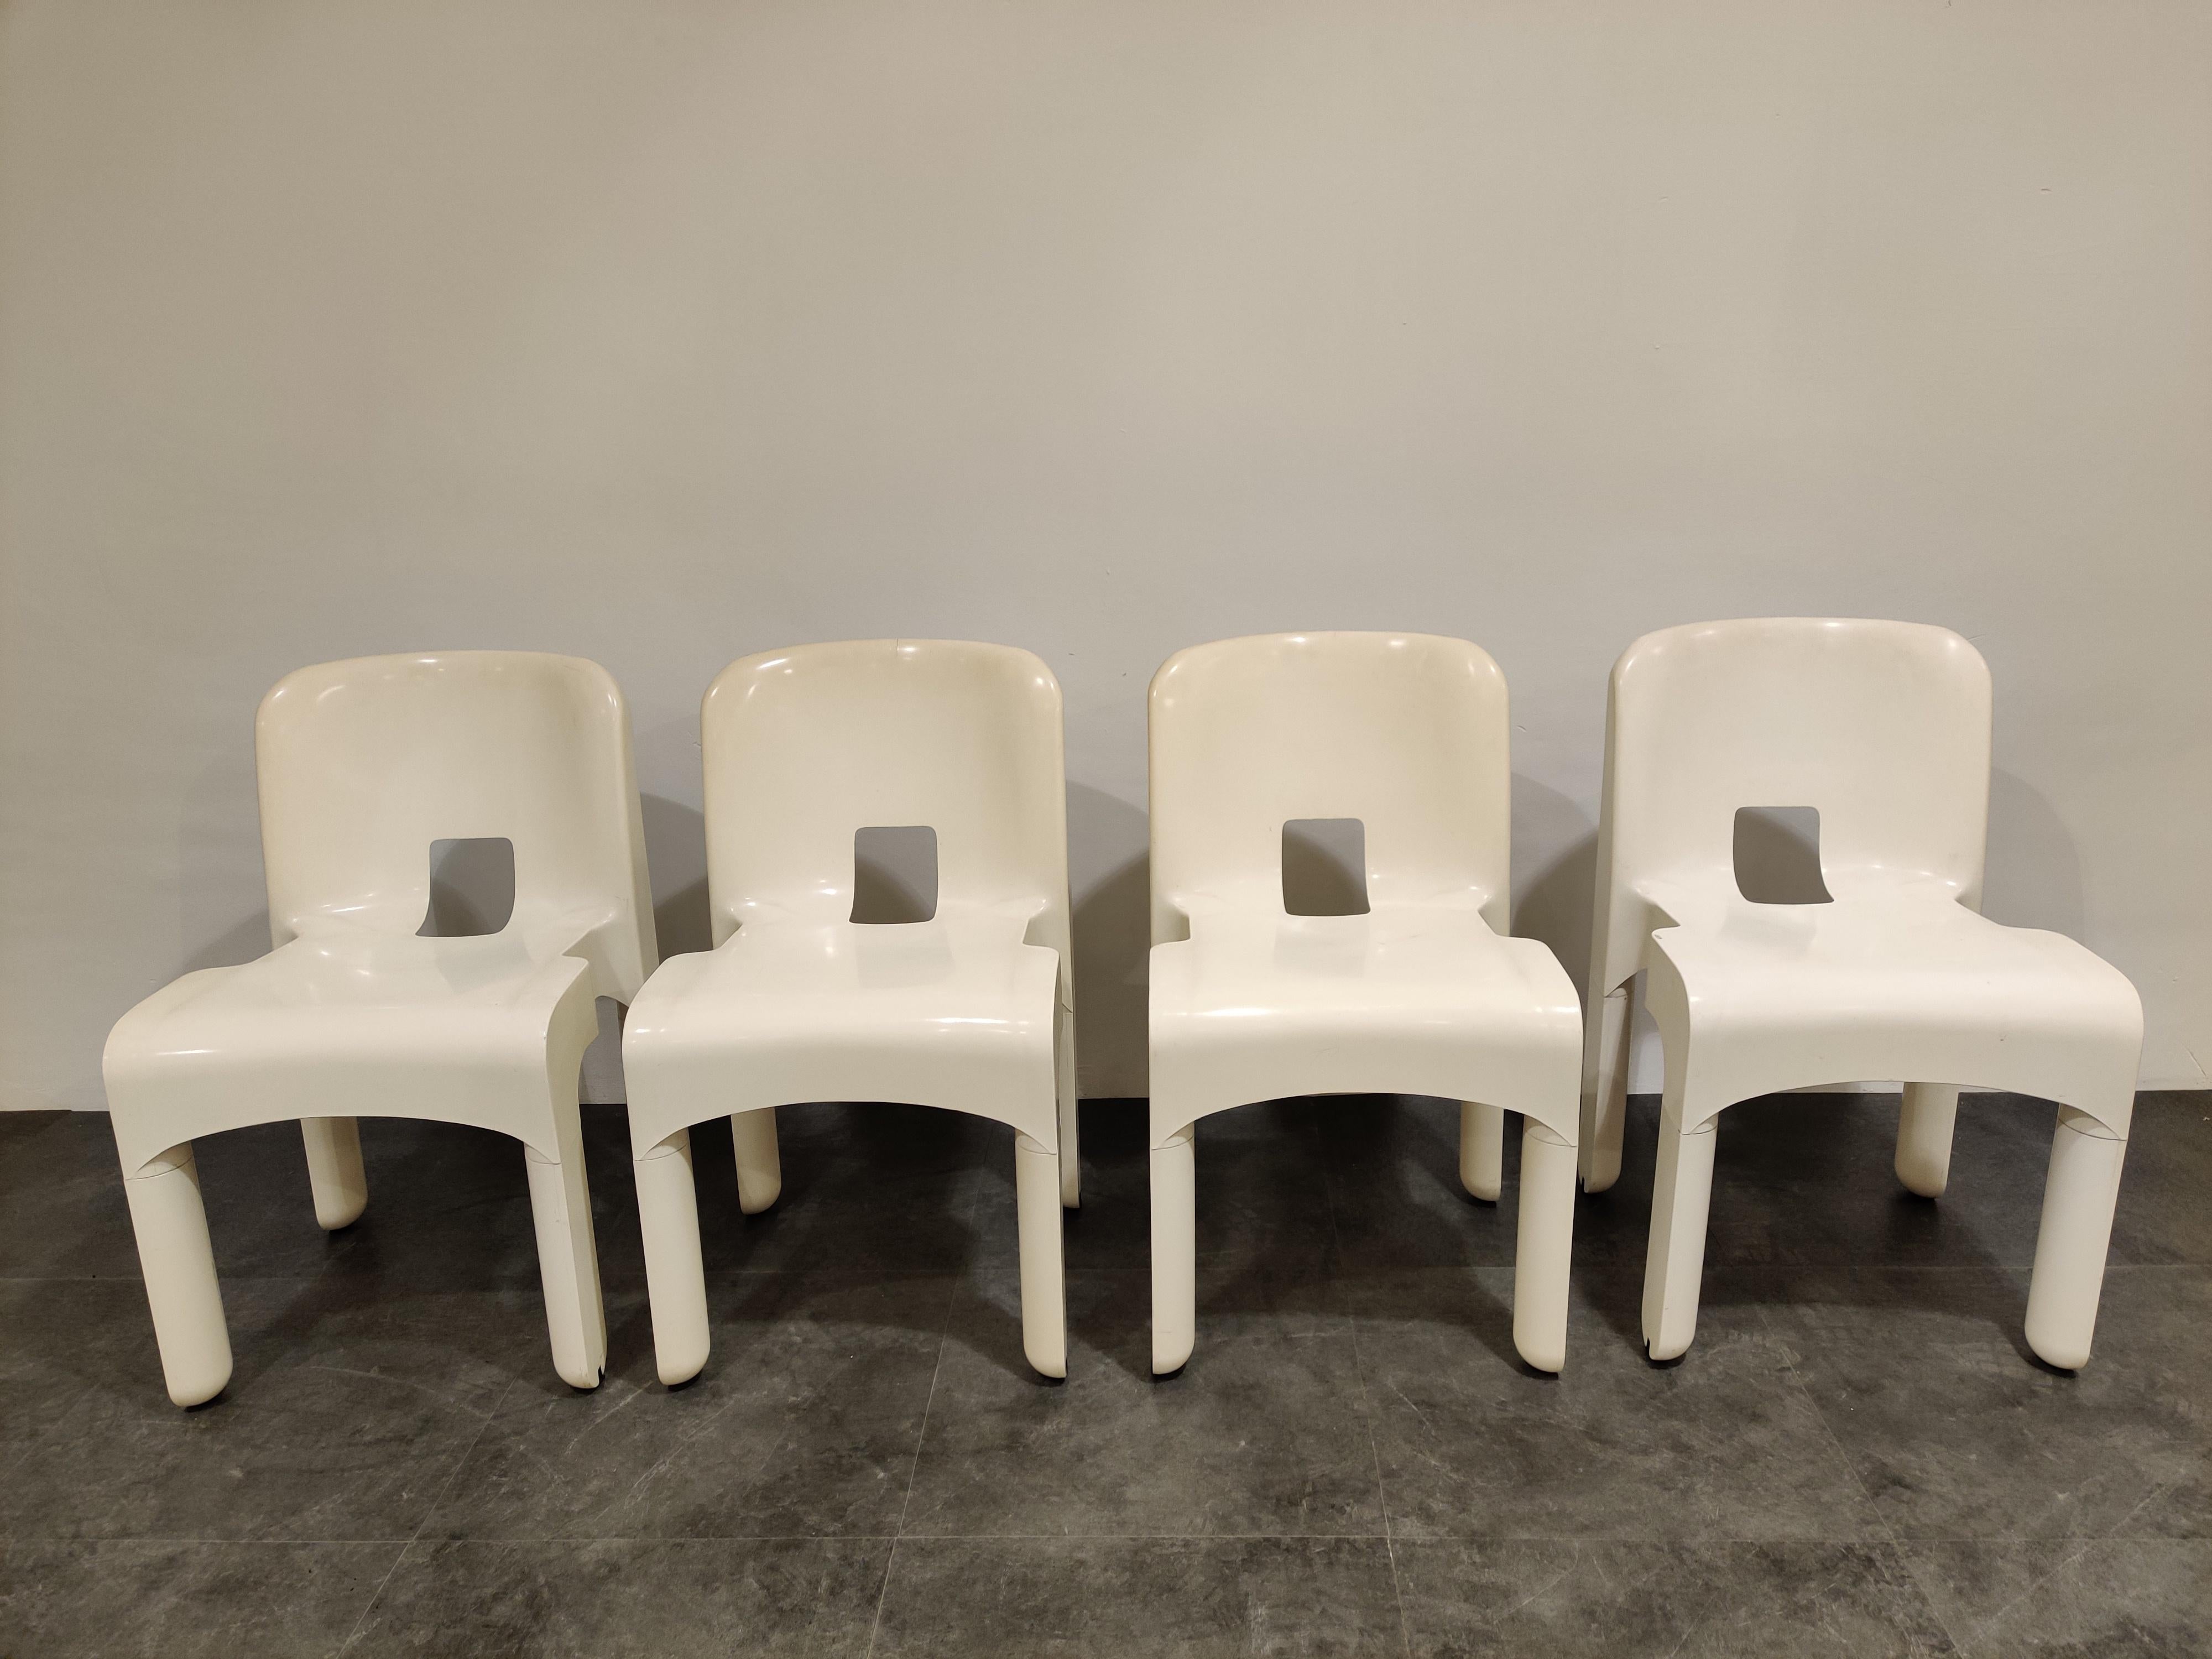 universal white plastic chair